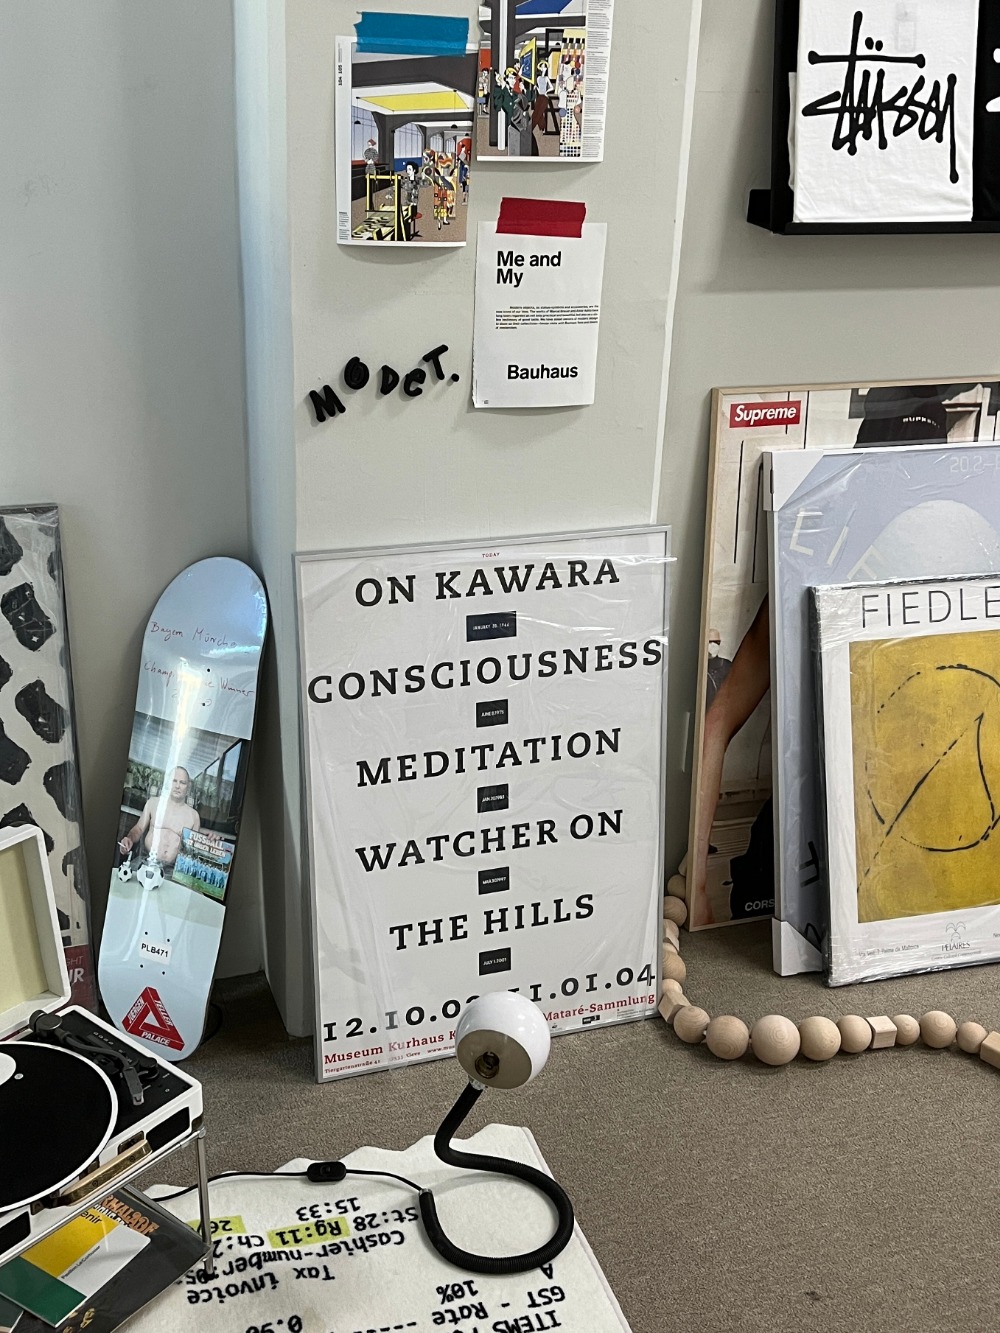 On Kawara - Consciousness. Meditation. Watcher on the Hills